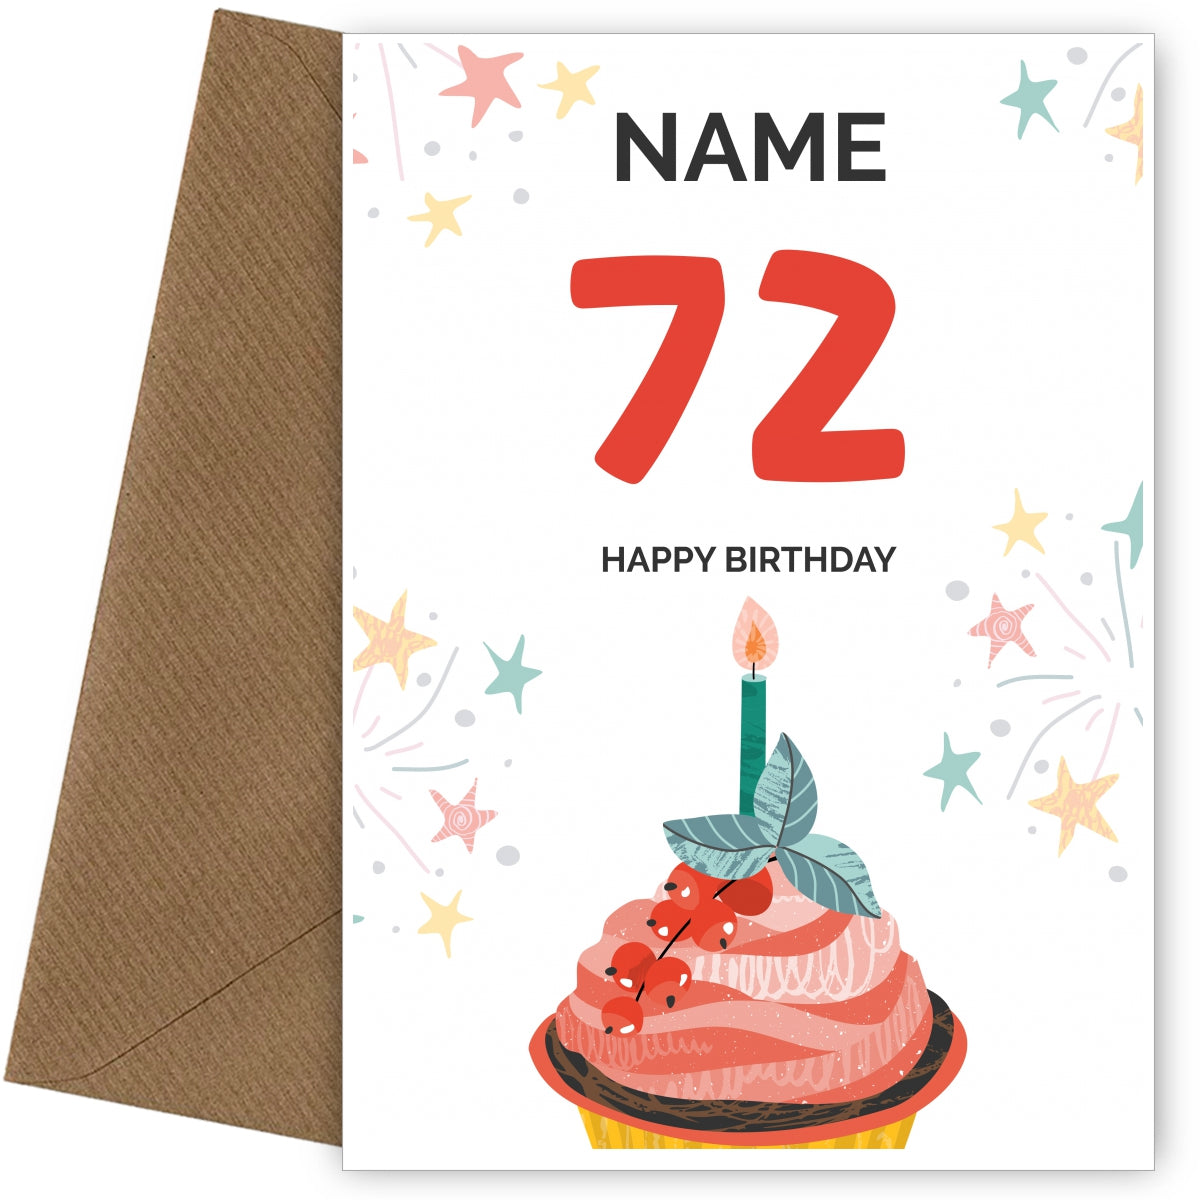 Happy 72nd Birthday Card - Fun Cupcake Design